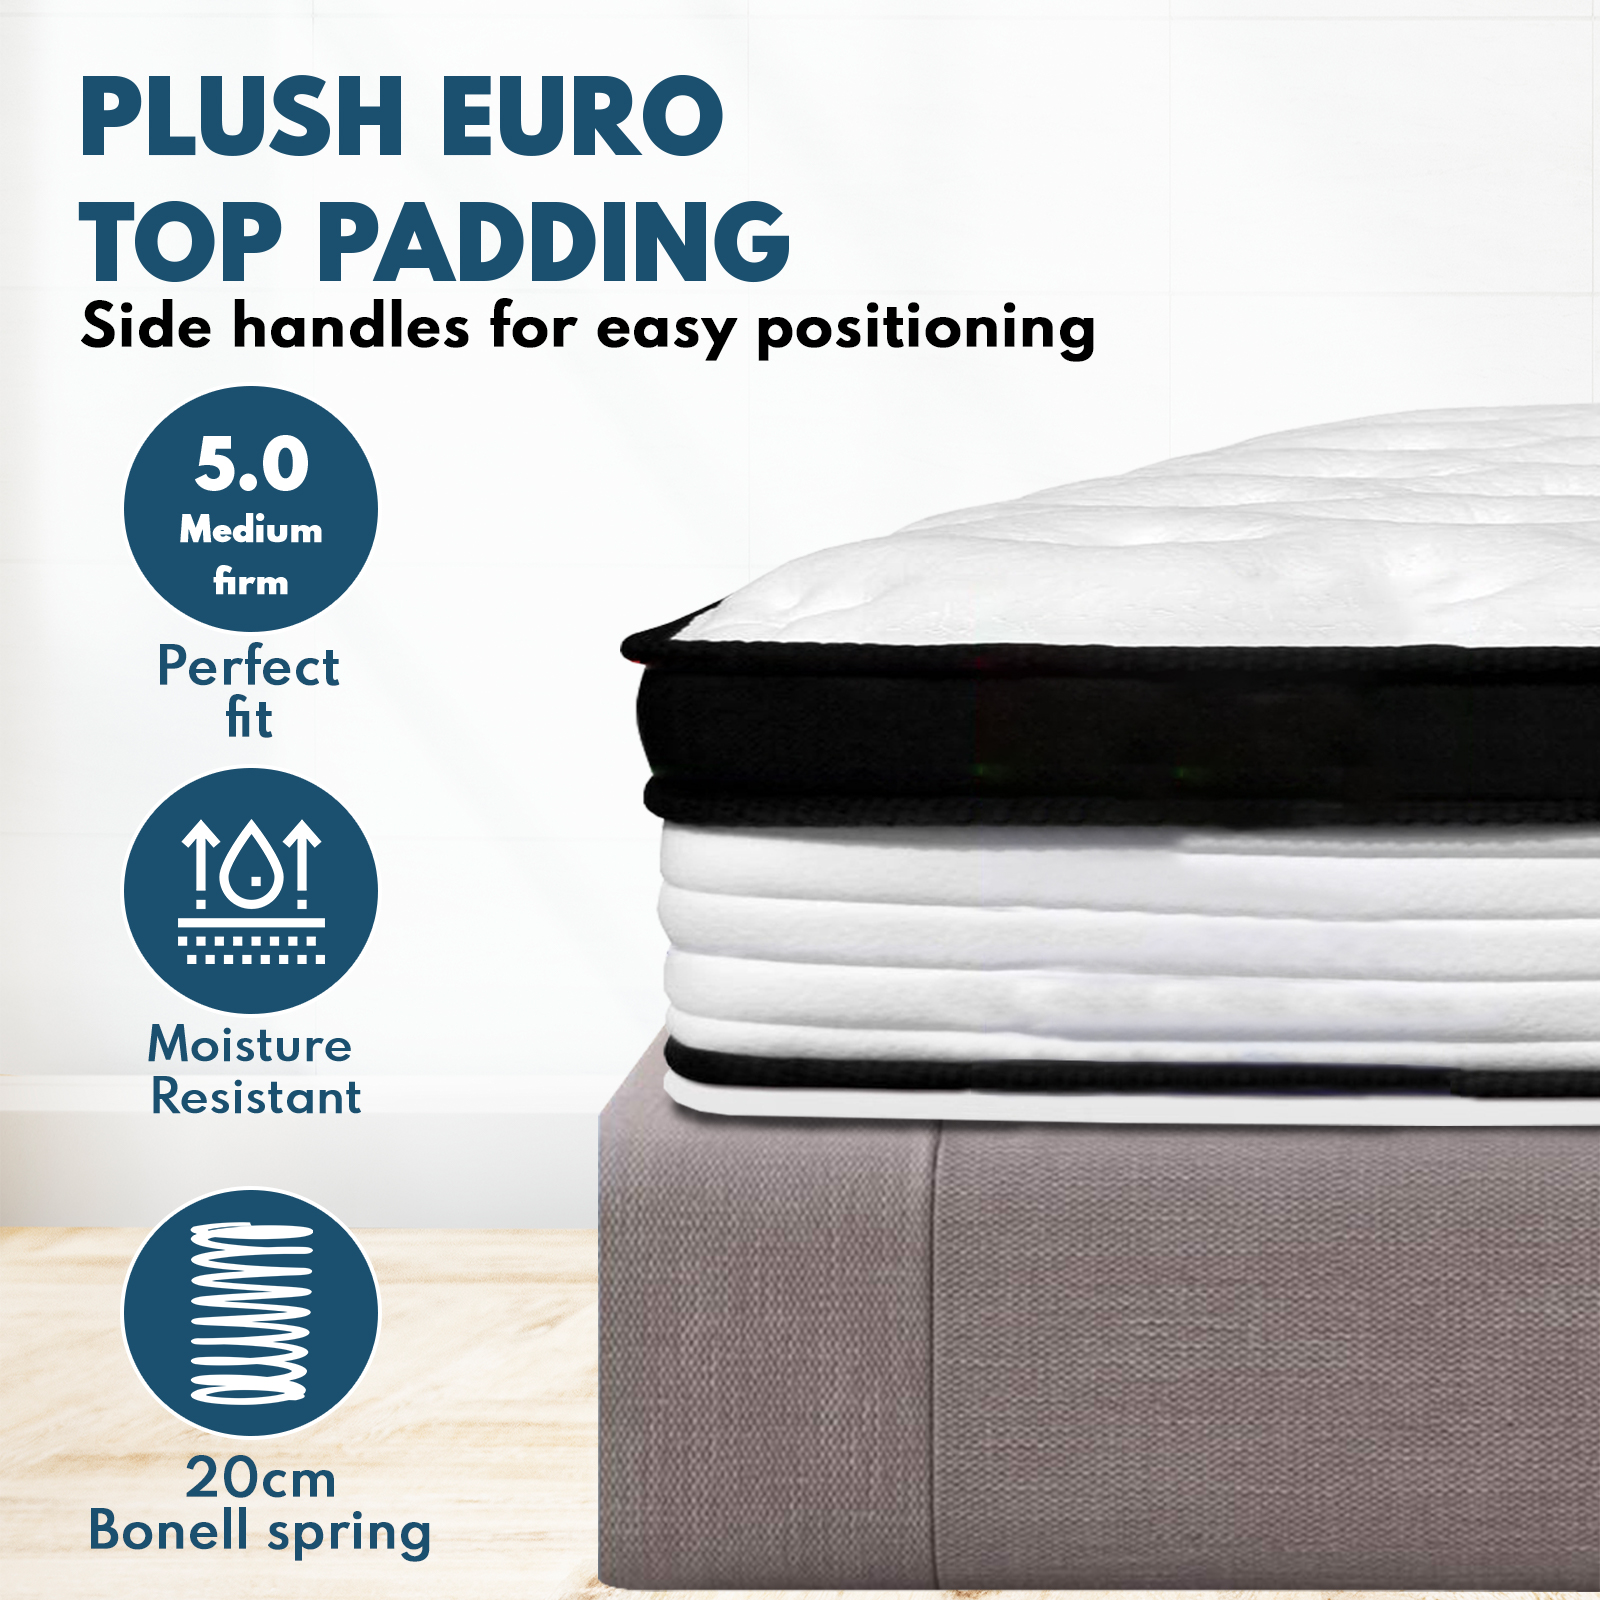 Single Size Thick Foam Mattress Bed Medium Firm 5 Zone Pocket Spring 31cm 